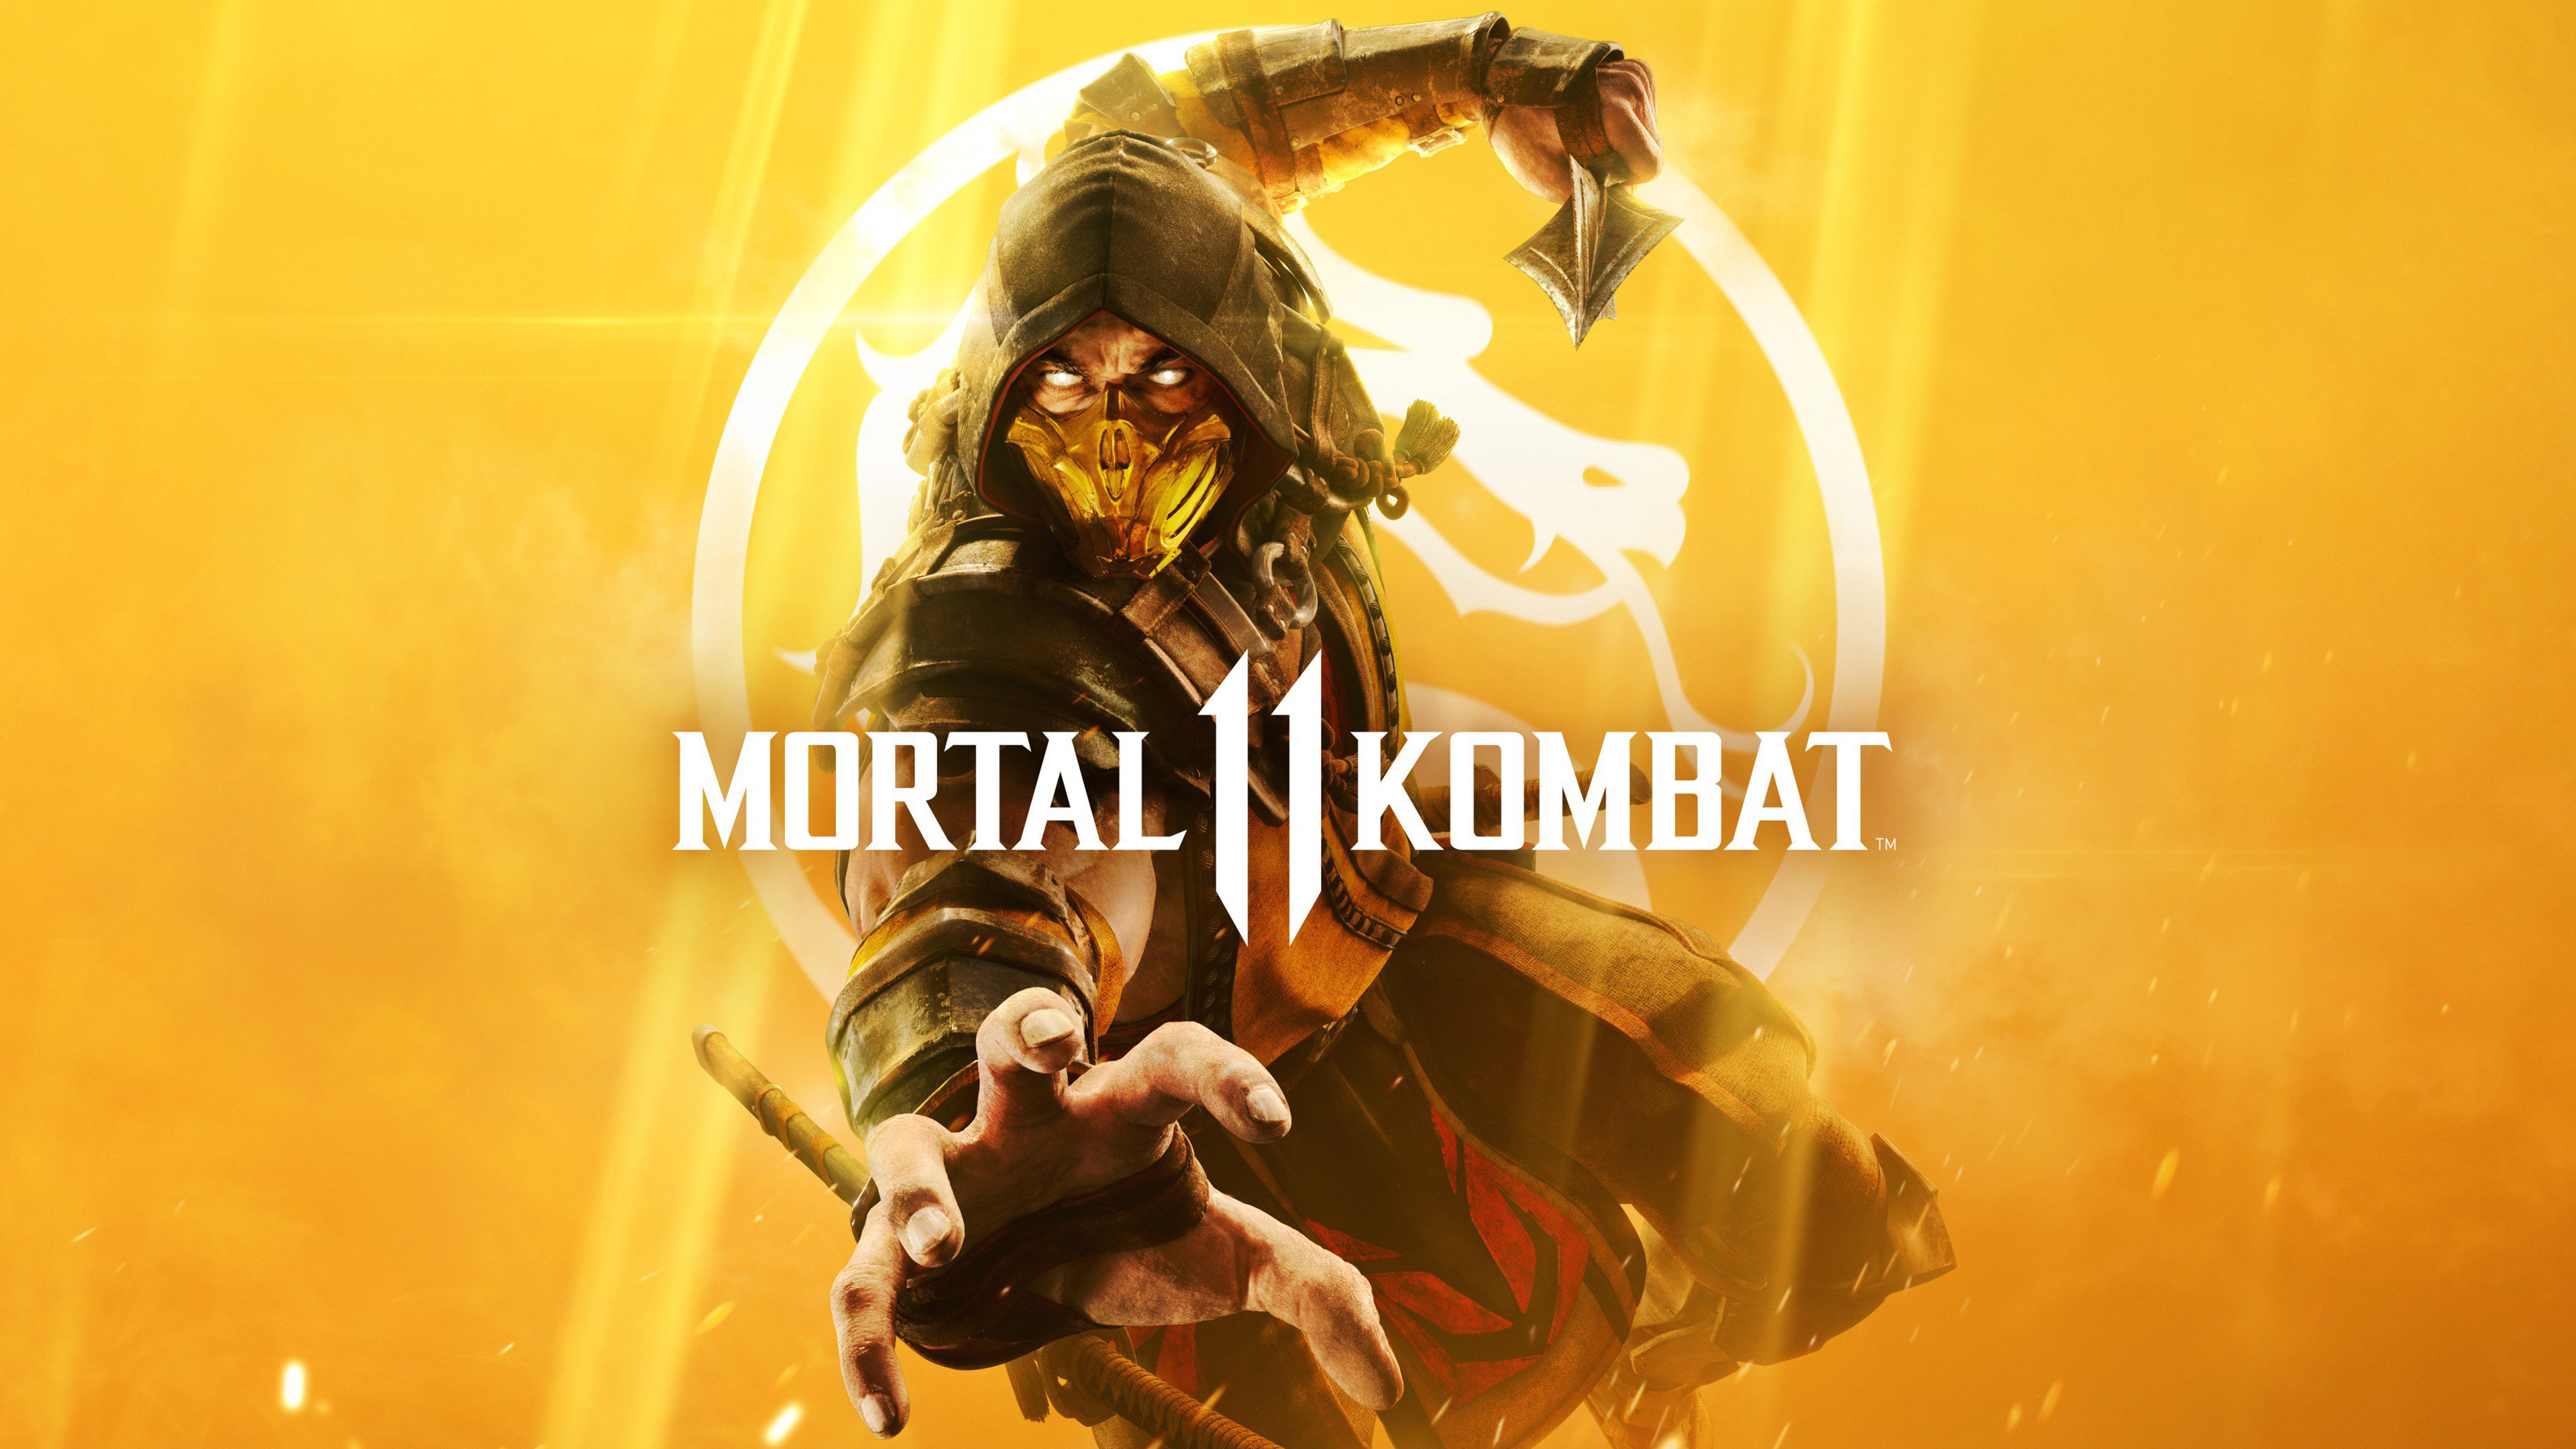 Mortal Kombat 11 Cover Art 4K